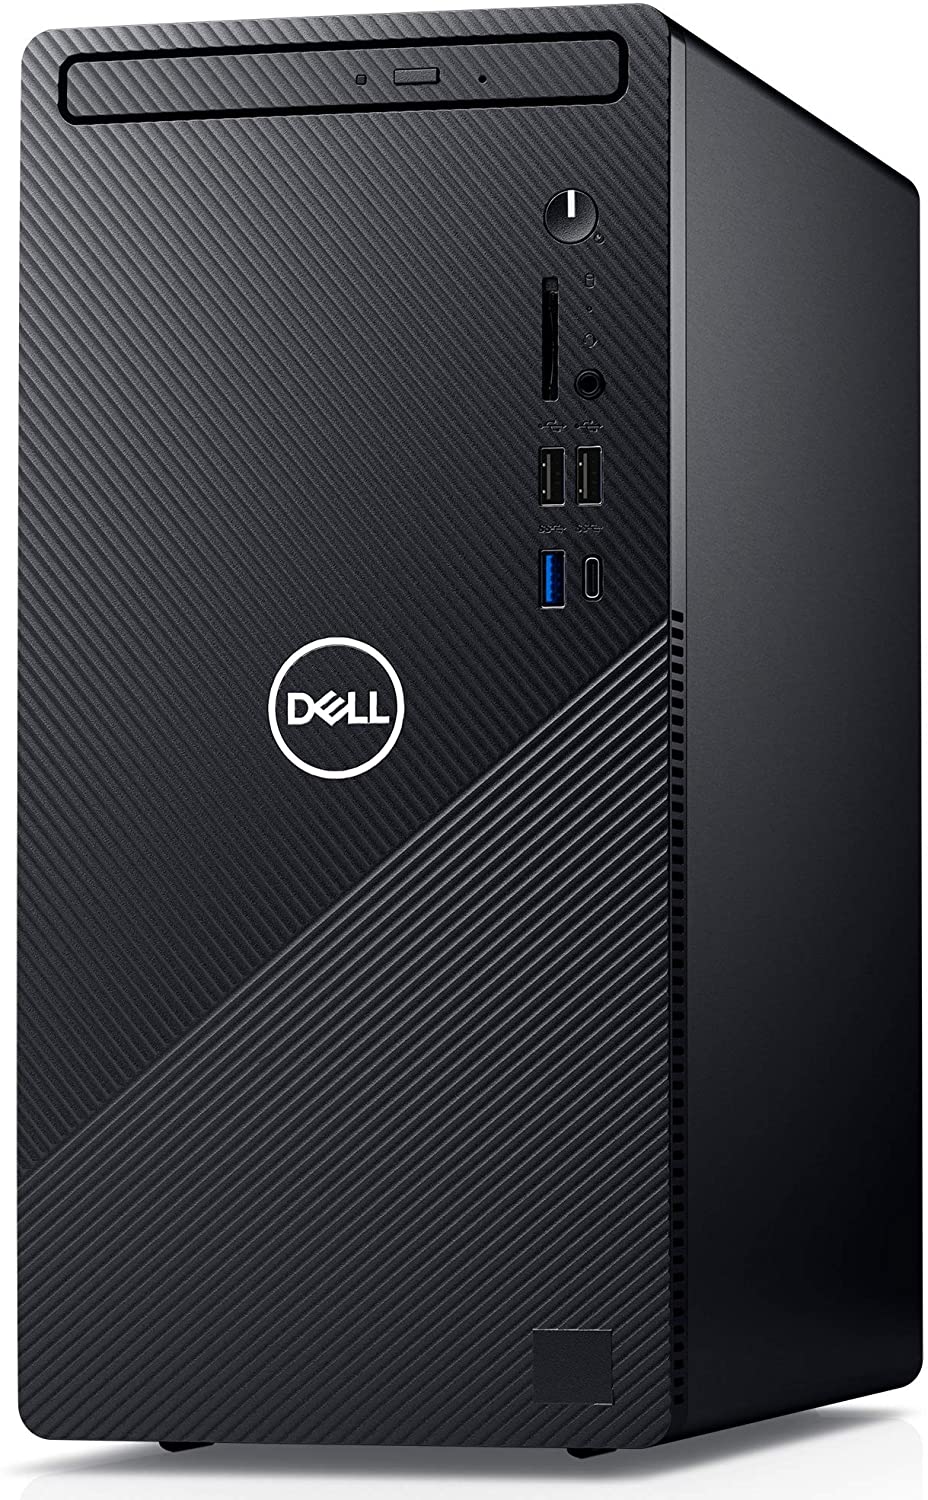 Sistem Brand Dell Inspiron 3881 Intel Core i5-10400F GTX 1650 SUPER-4GB RAM 8GB HDD 1TB + SSD 256GB Linux